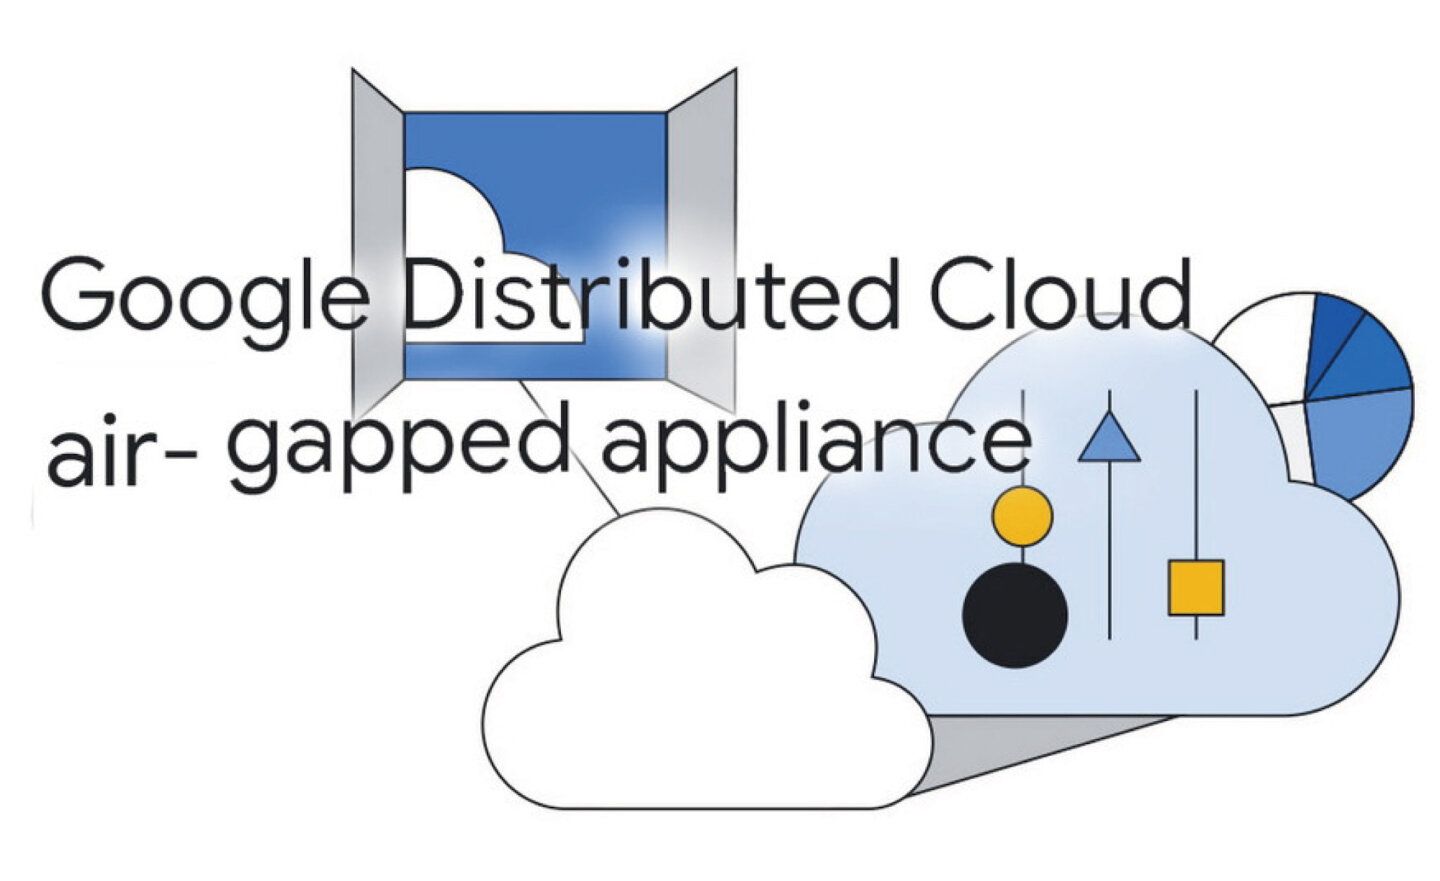 Google Distributed Cloud 網路隔絕設備推出新，為邊緣環境導入雲端和 AI 功能